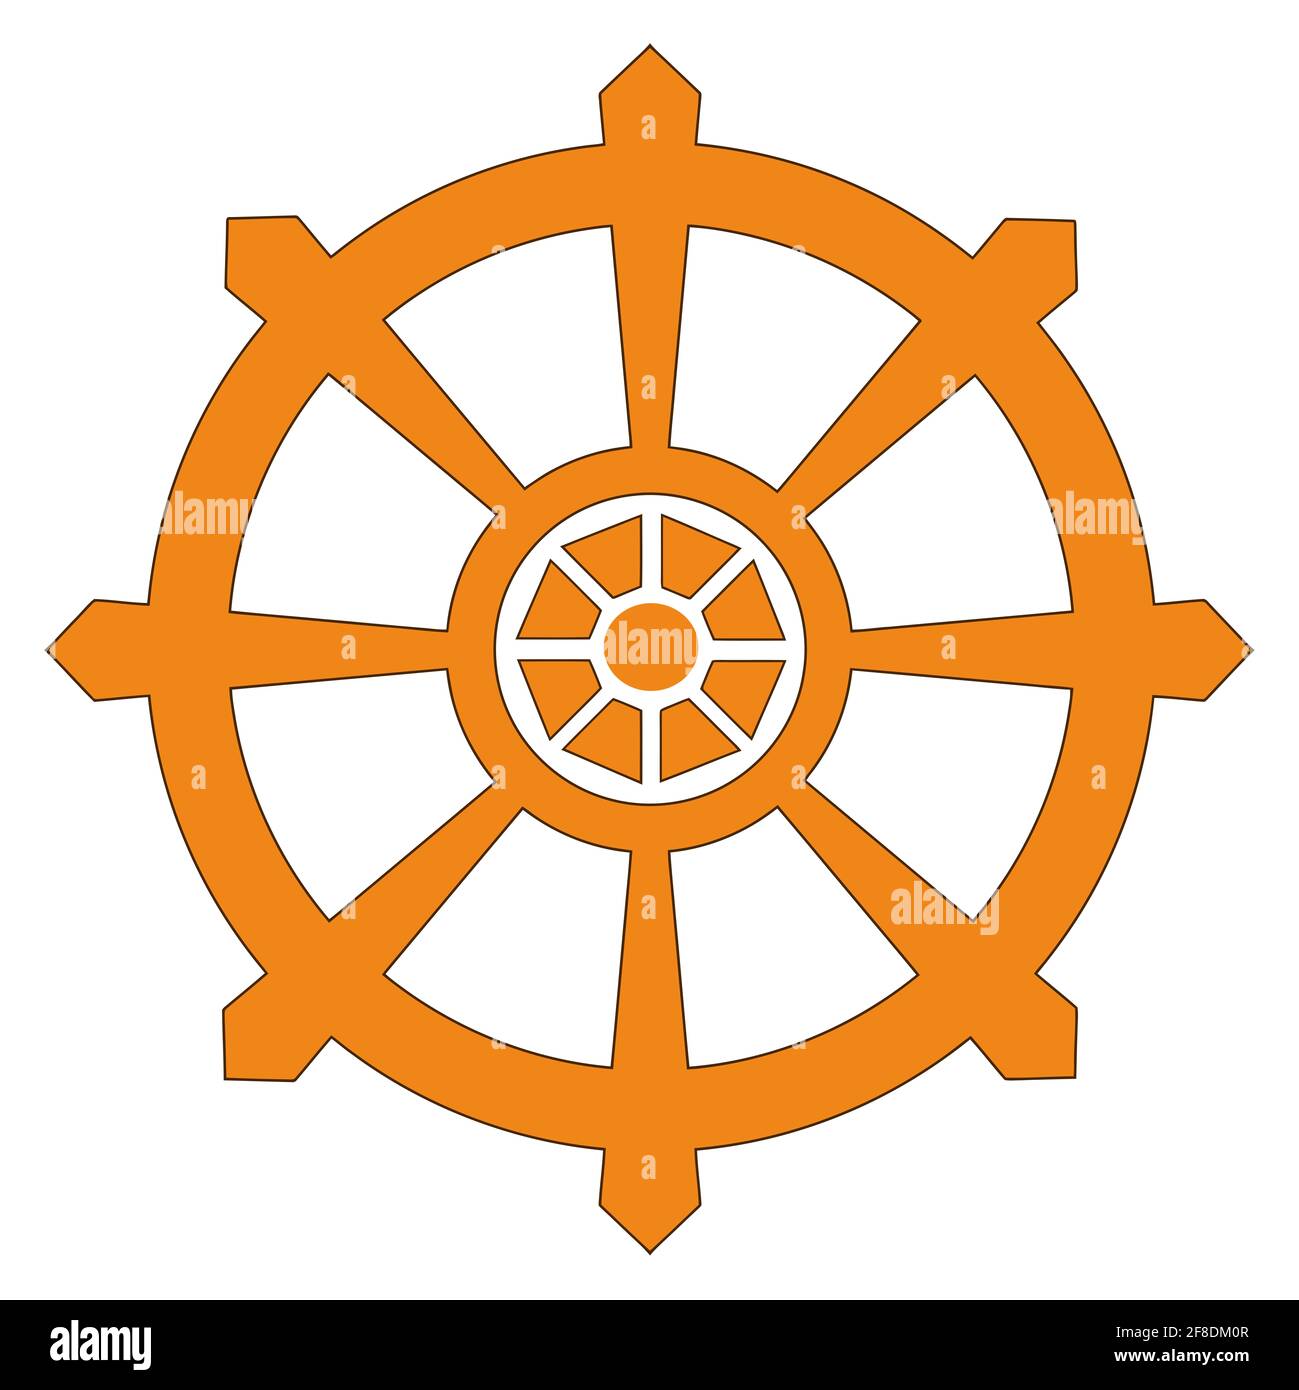 chakra buddhism wheel of dharma orange illustration Stock Photo